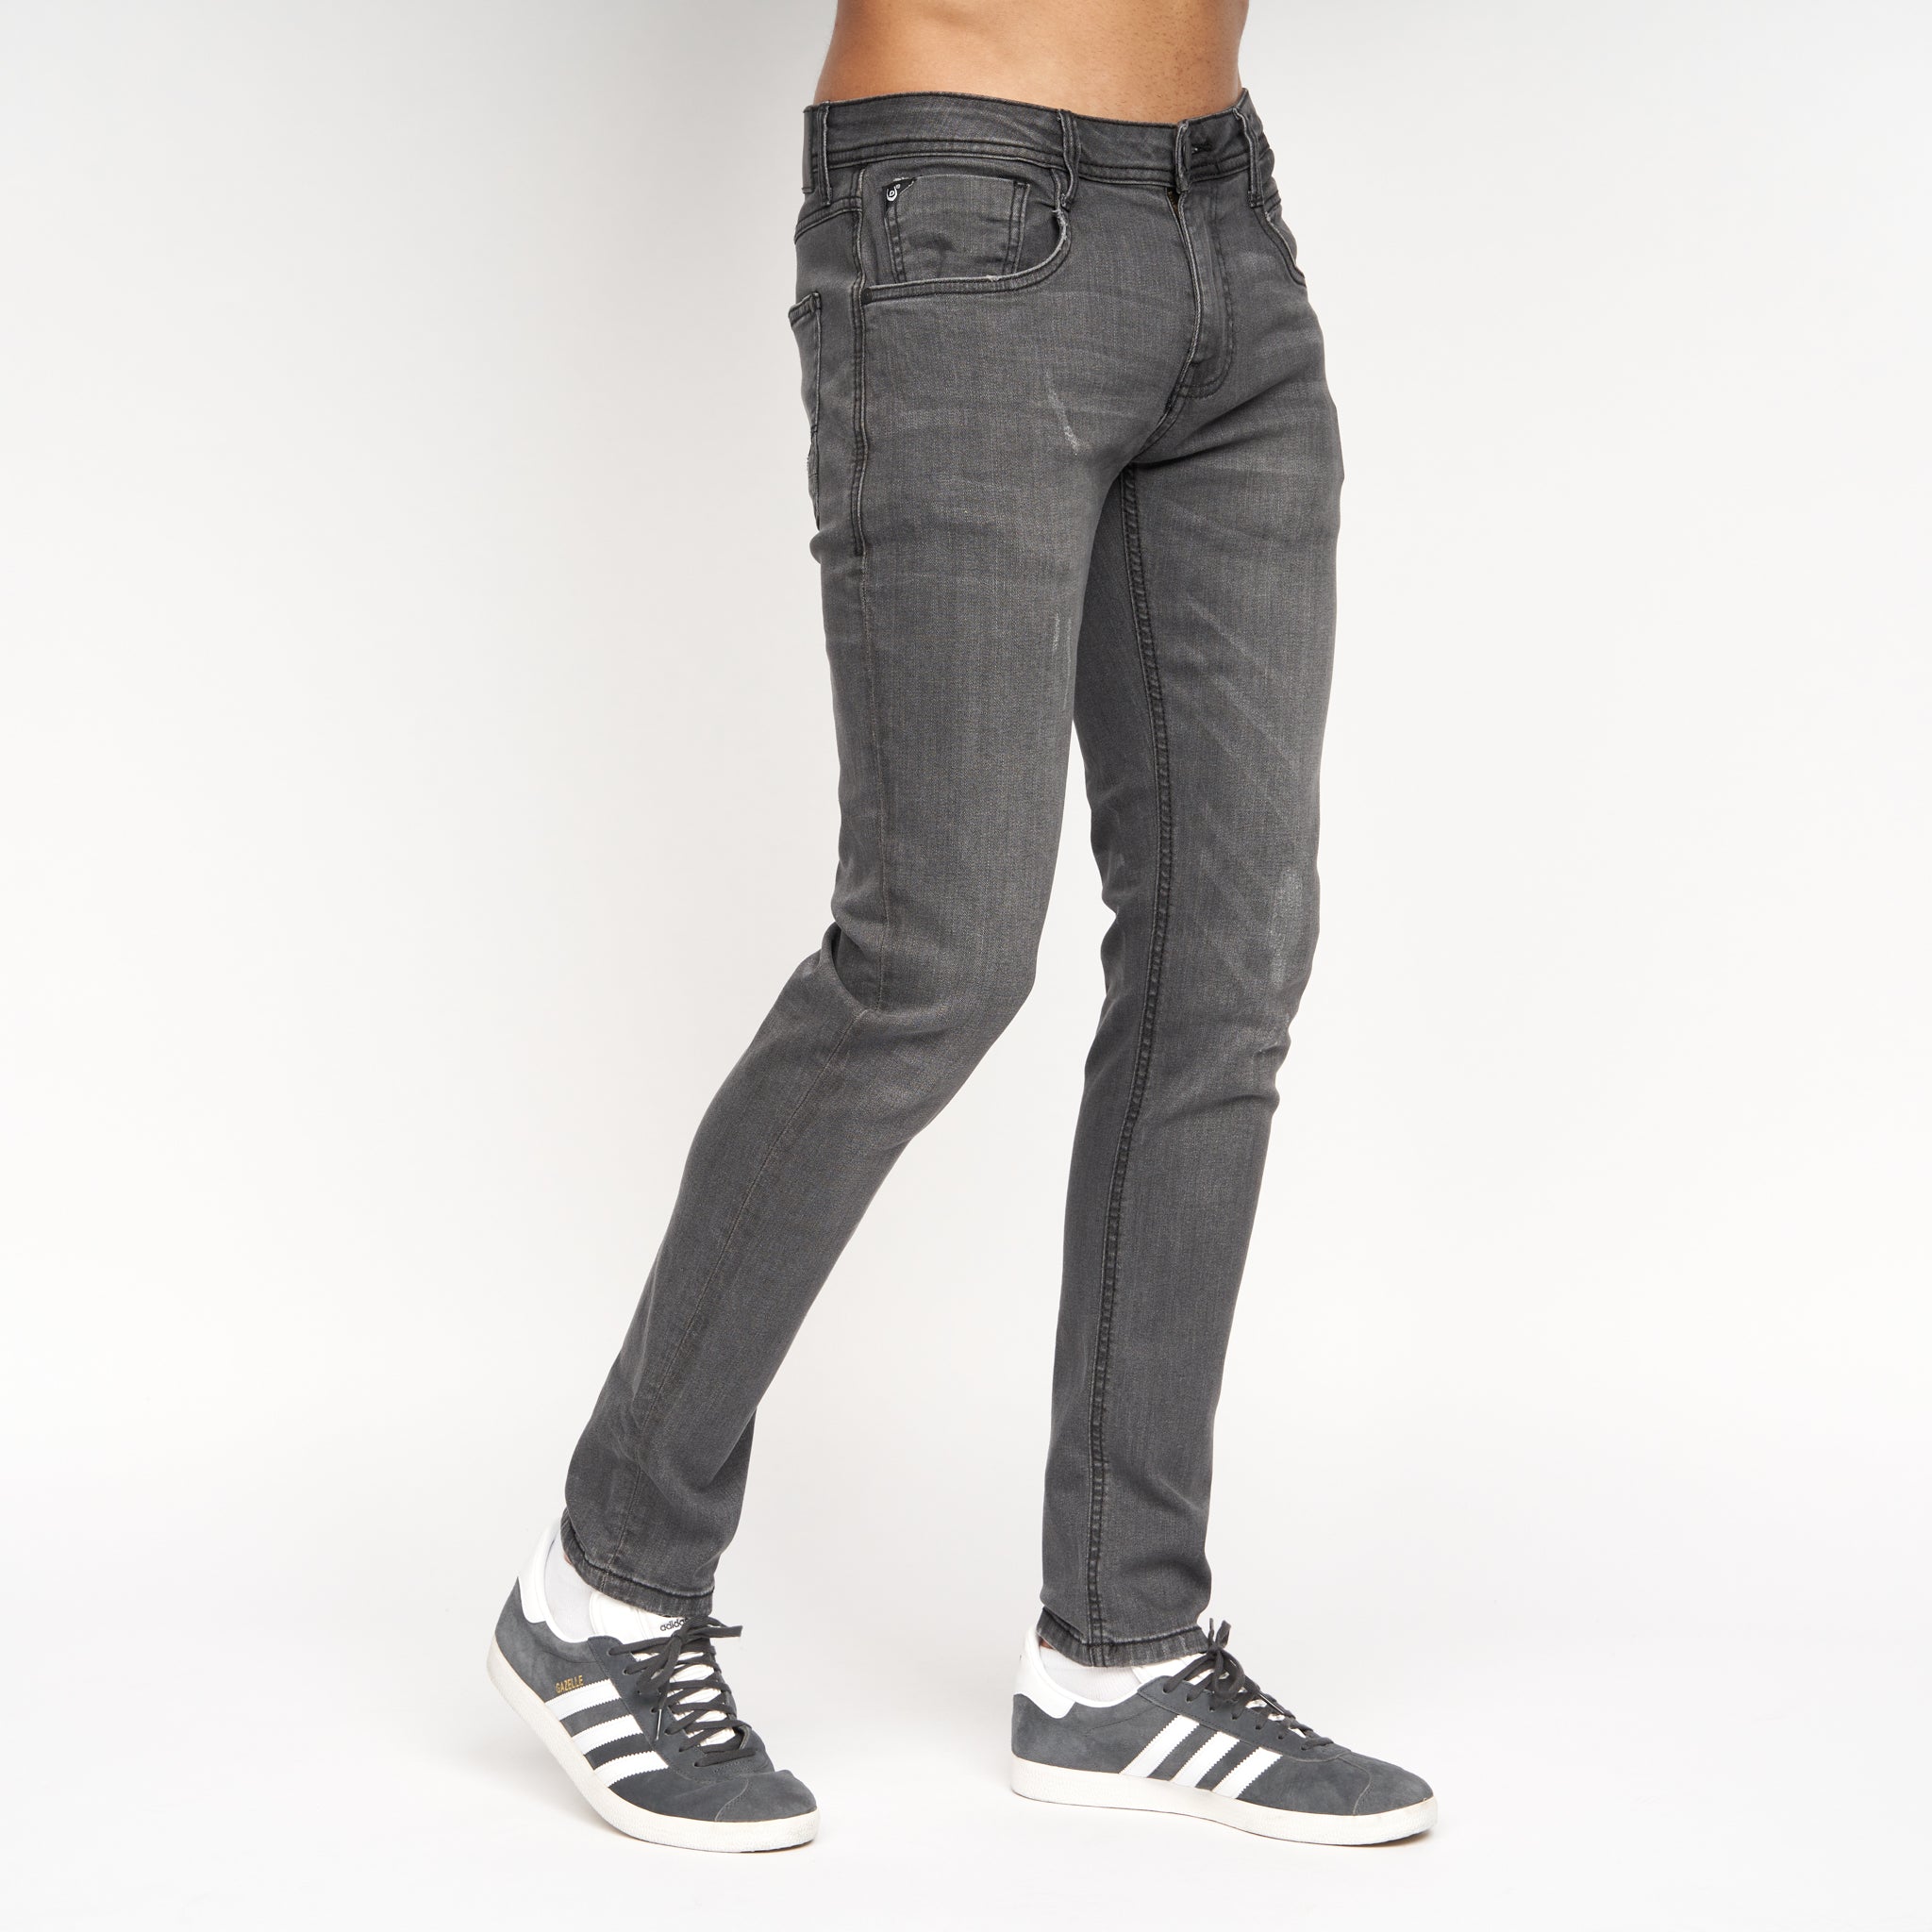 Tranfold Slim Fit Jeans Grey